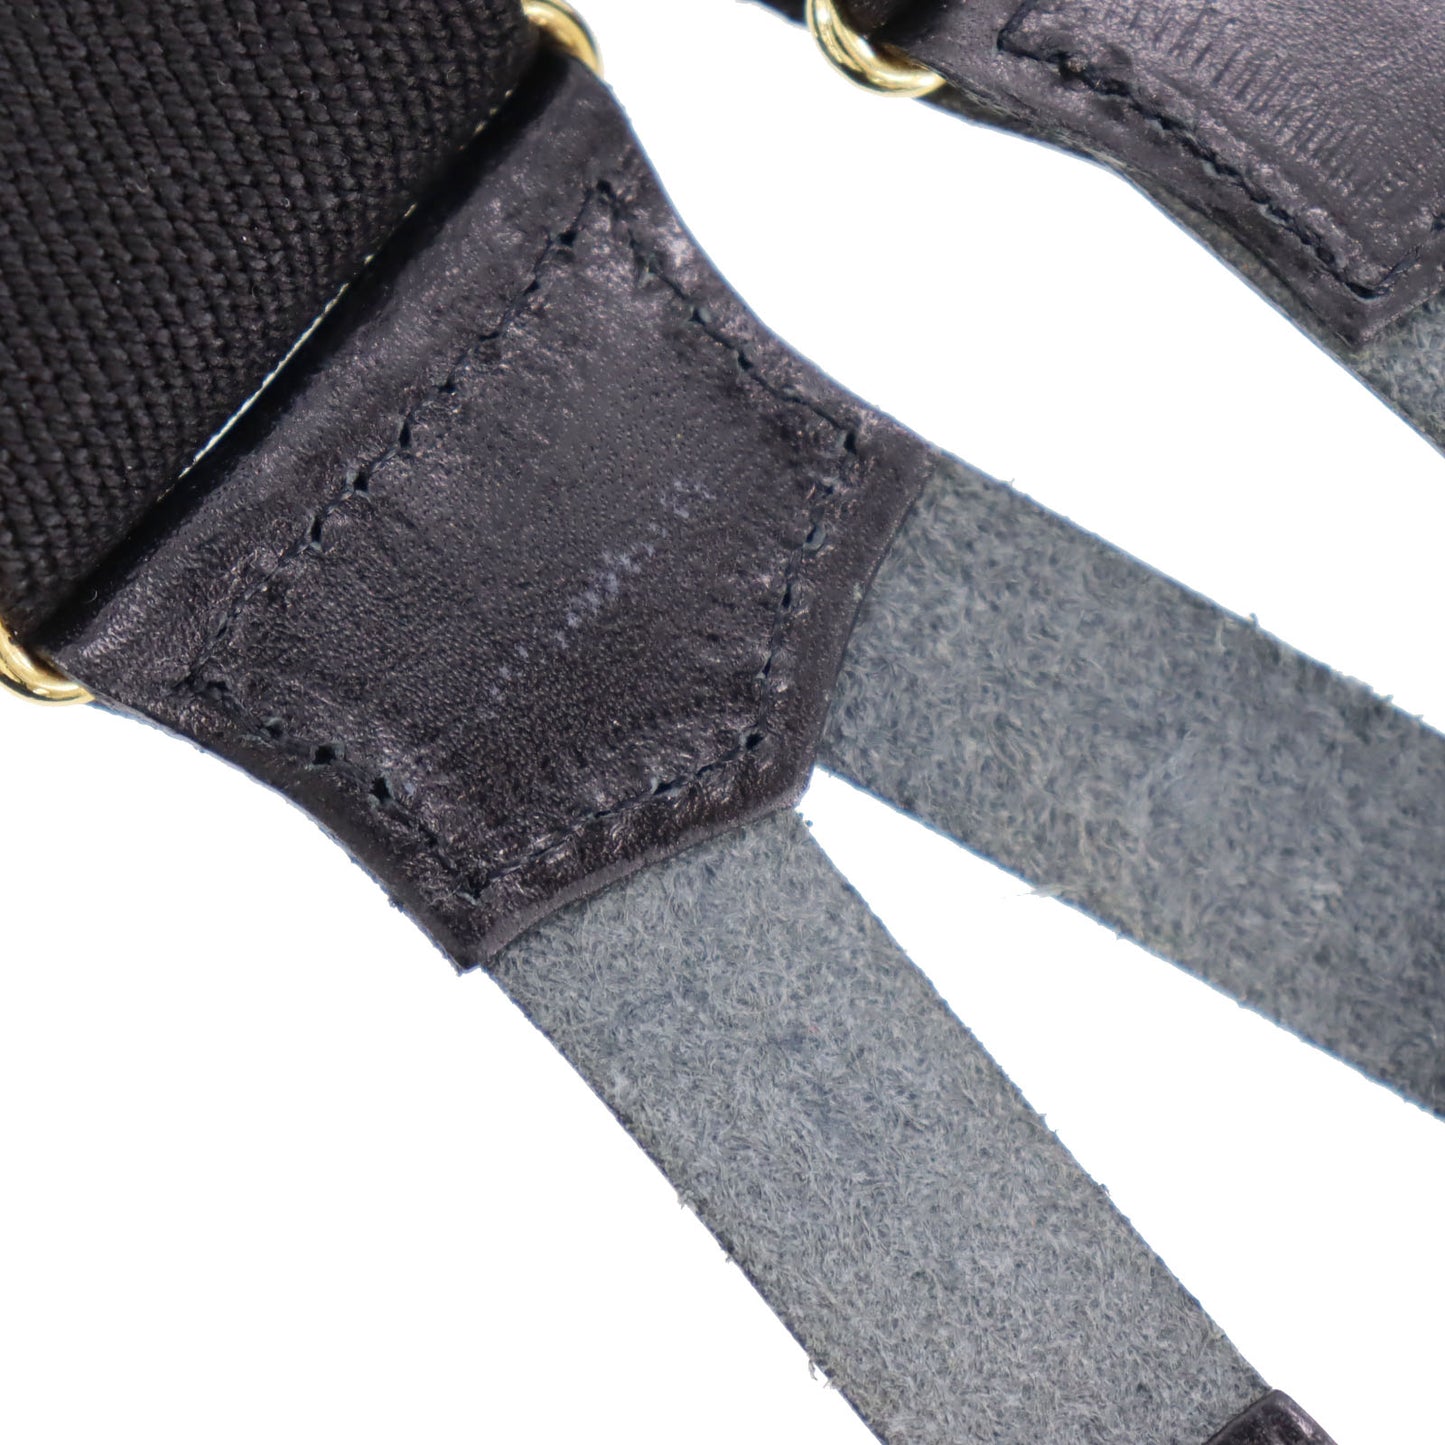 CHANEL Logo Suspender Black Sewing Elastic Leather #CJ416